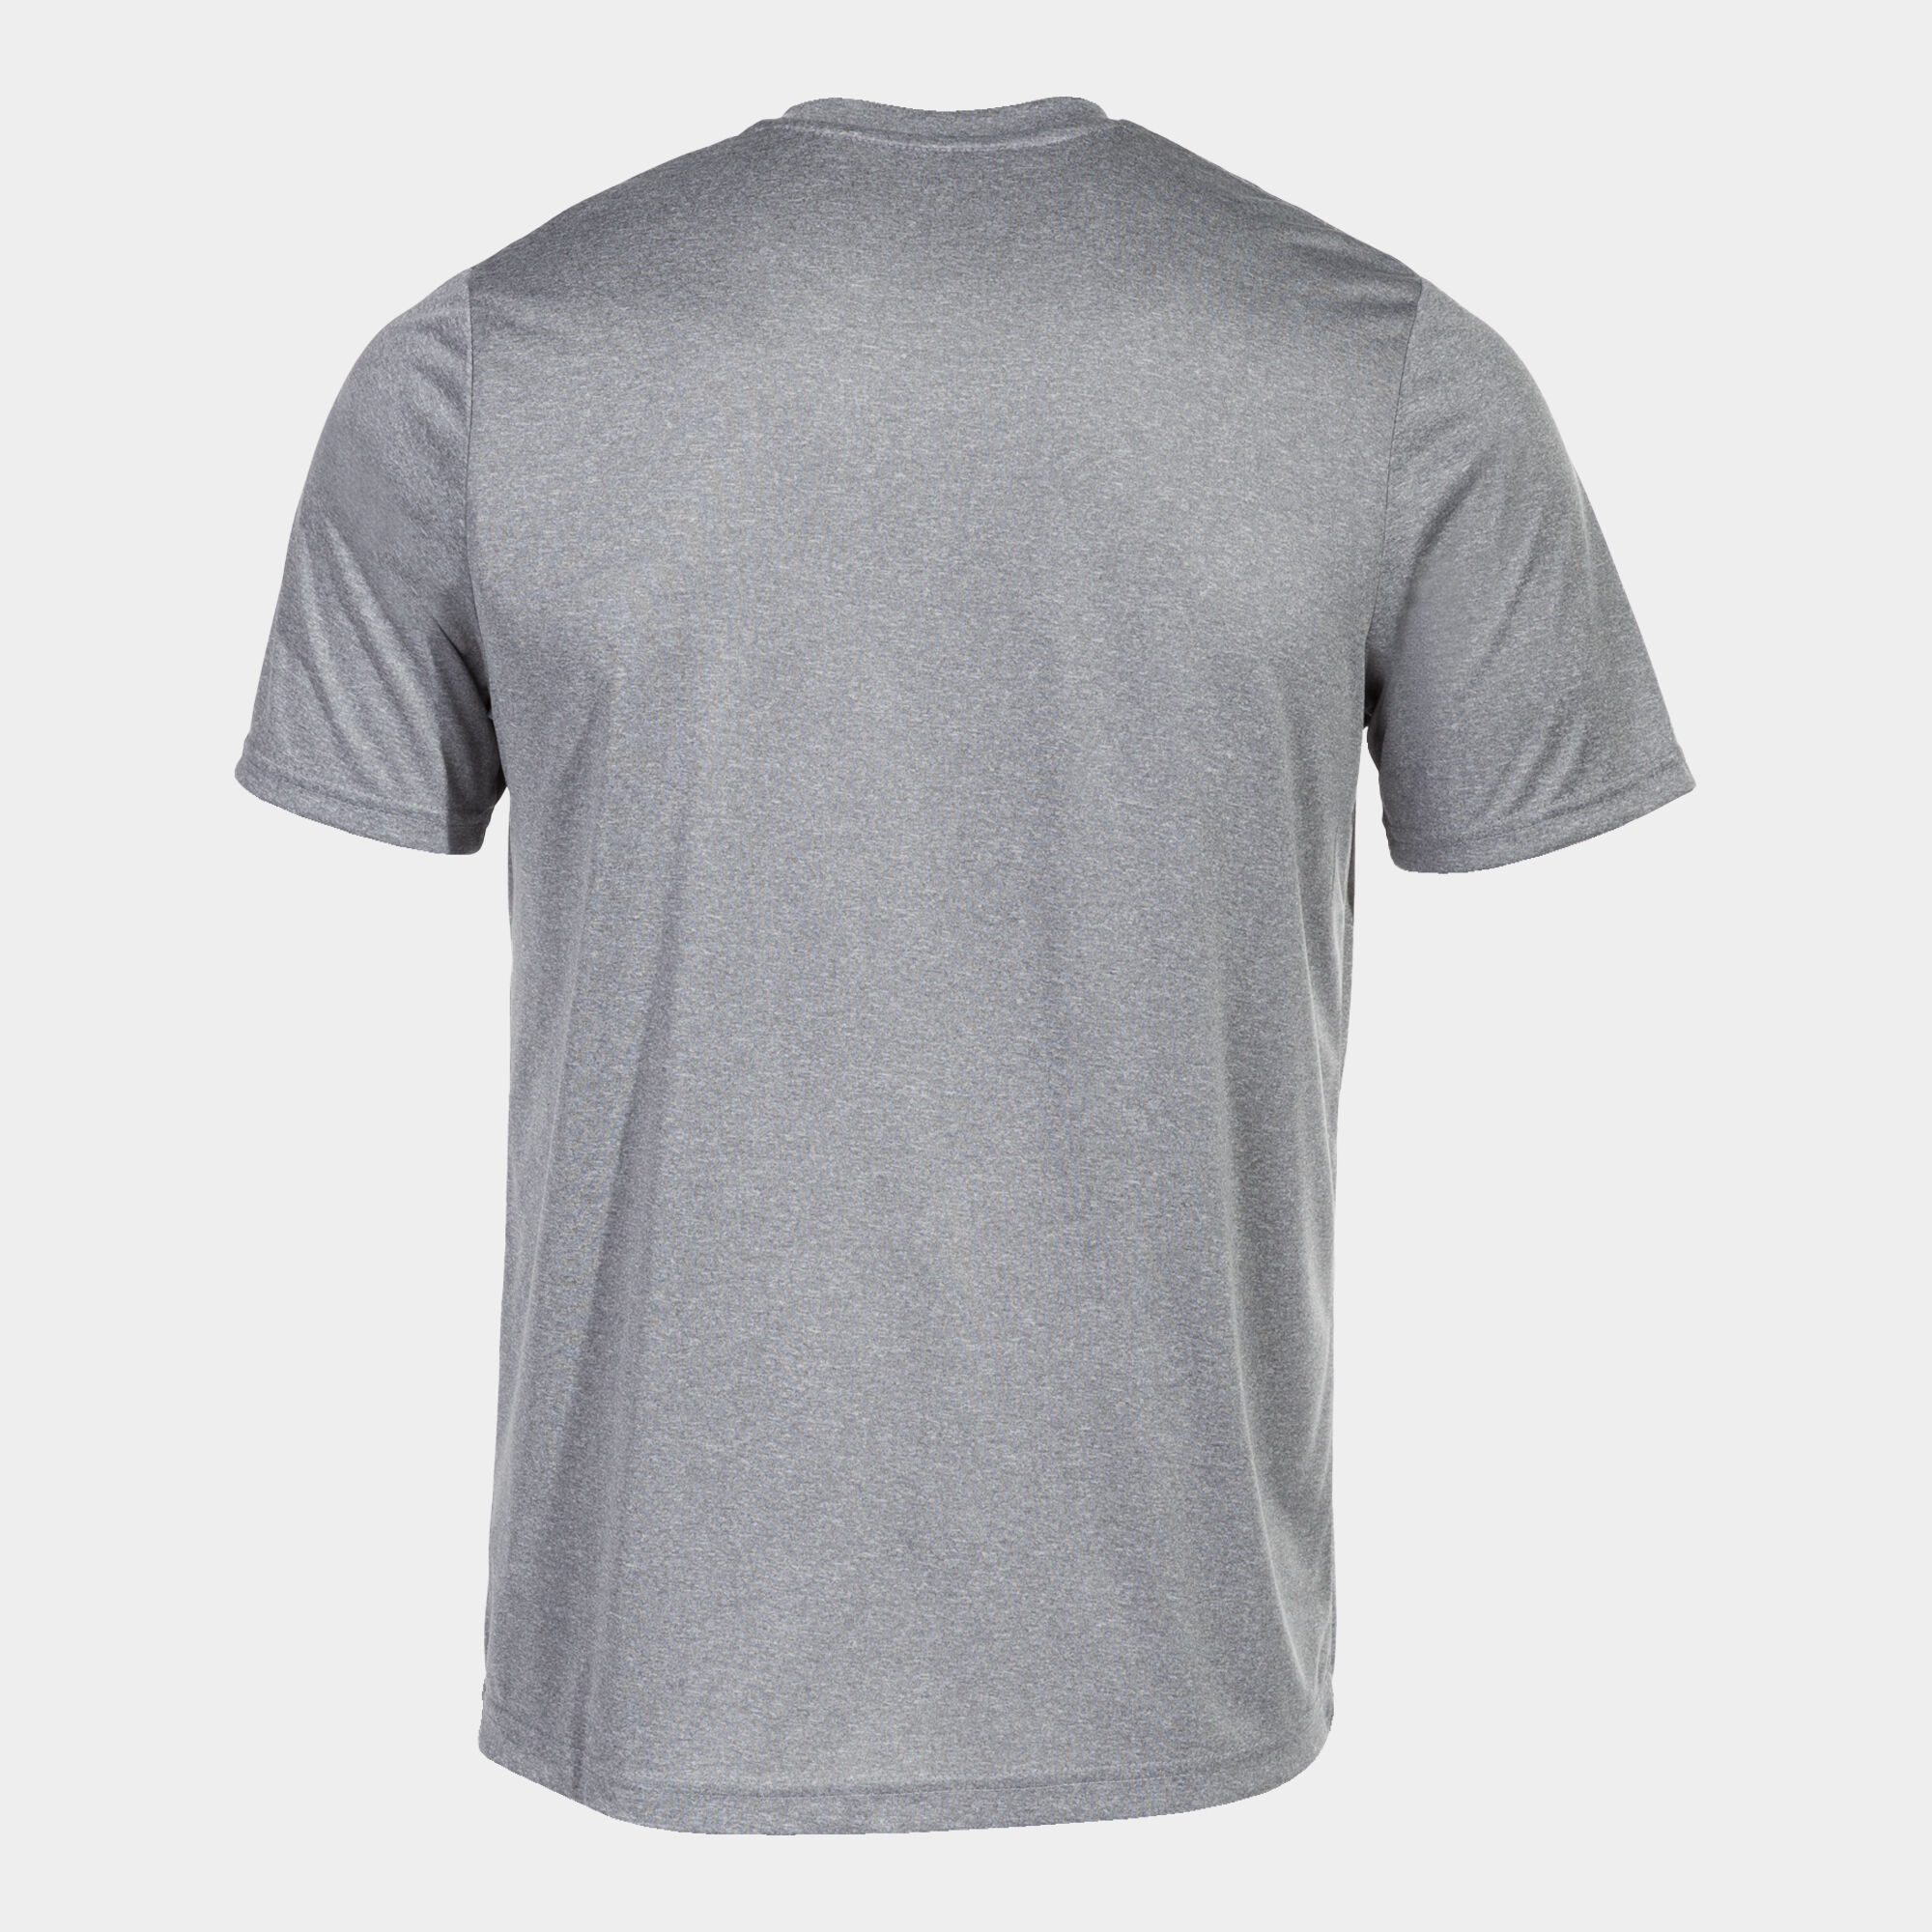 Camiseta manga corta hombre Combi gris melange